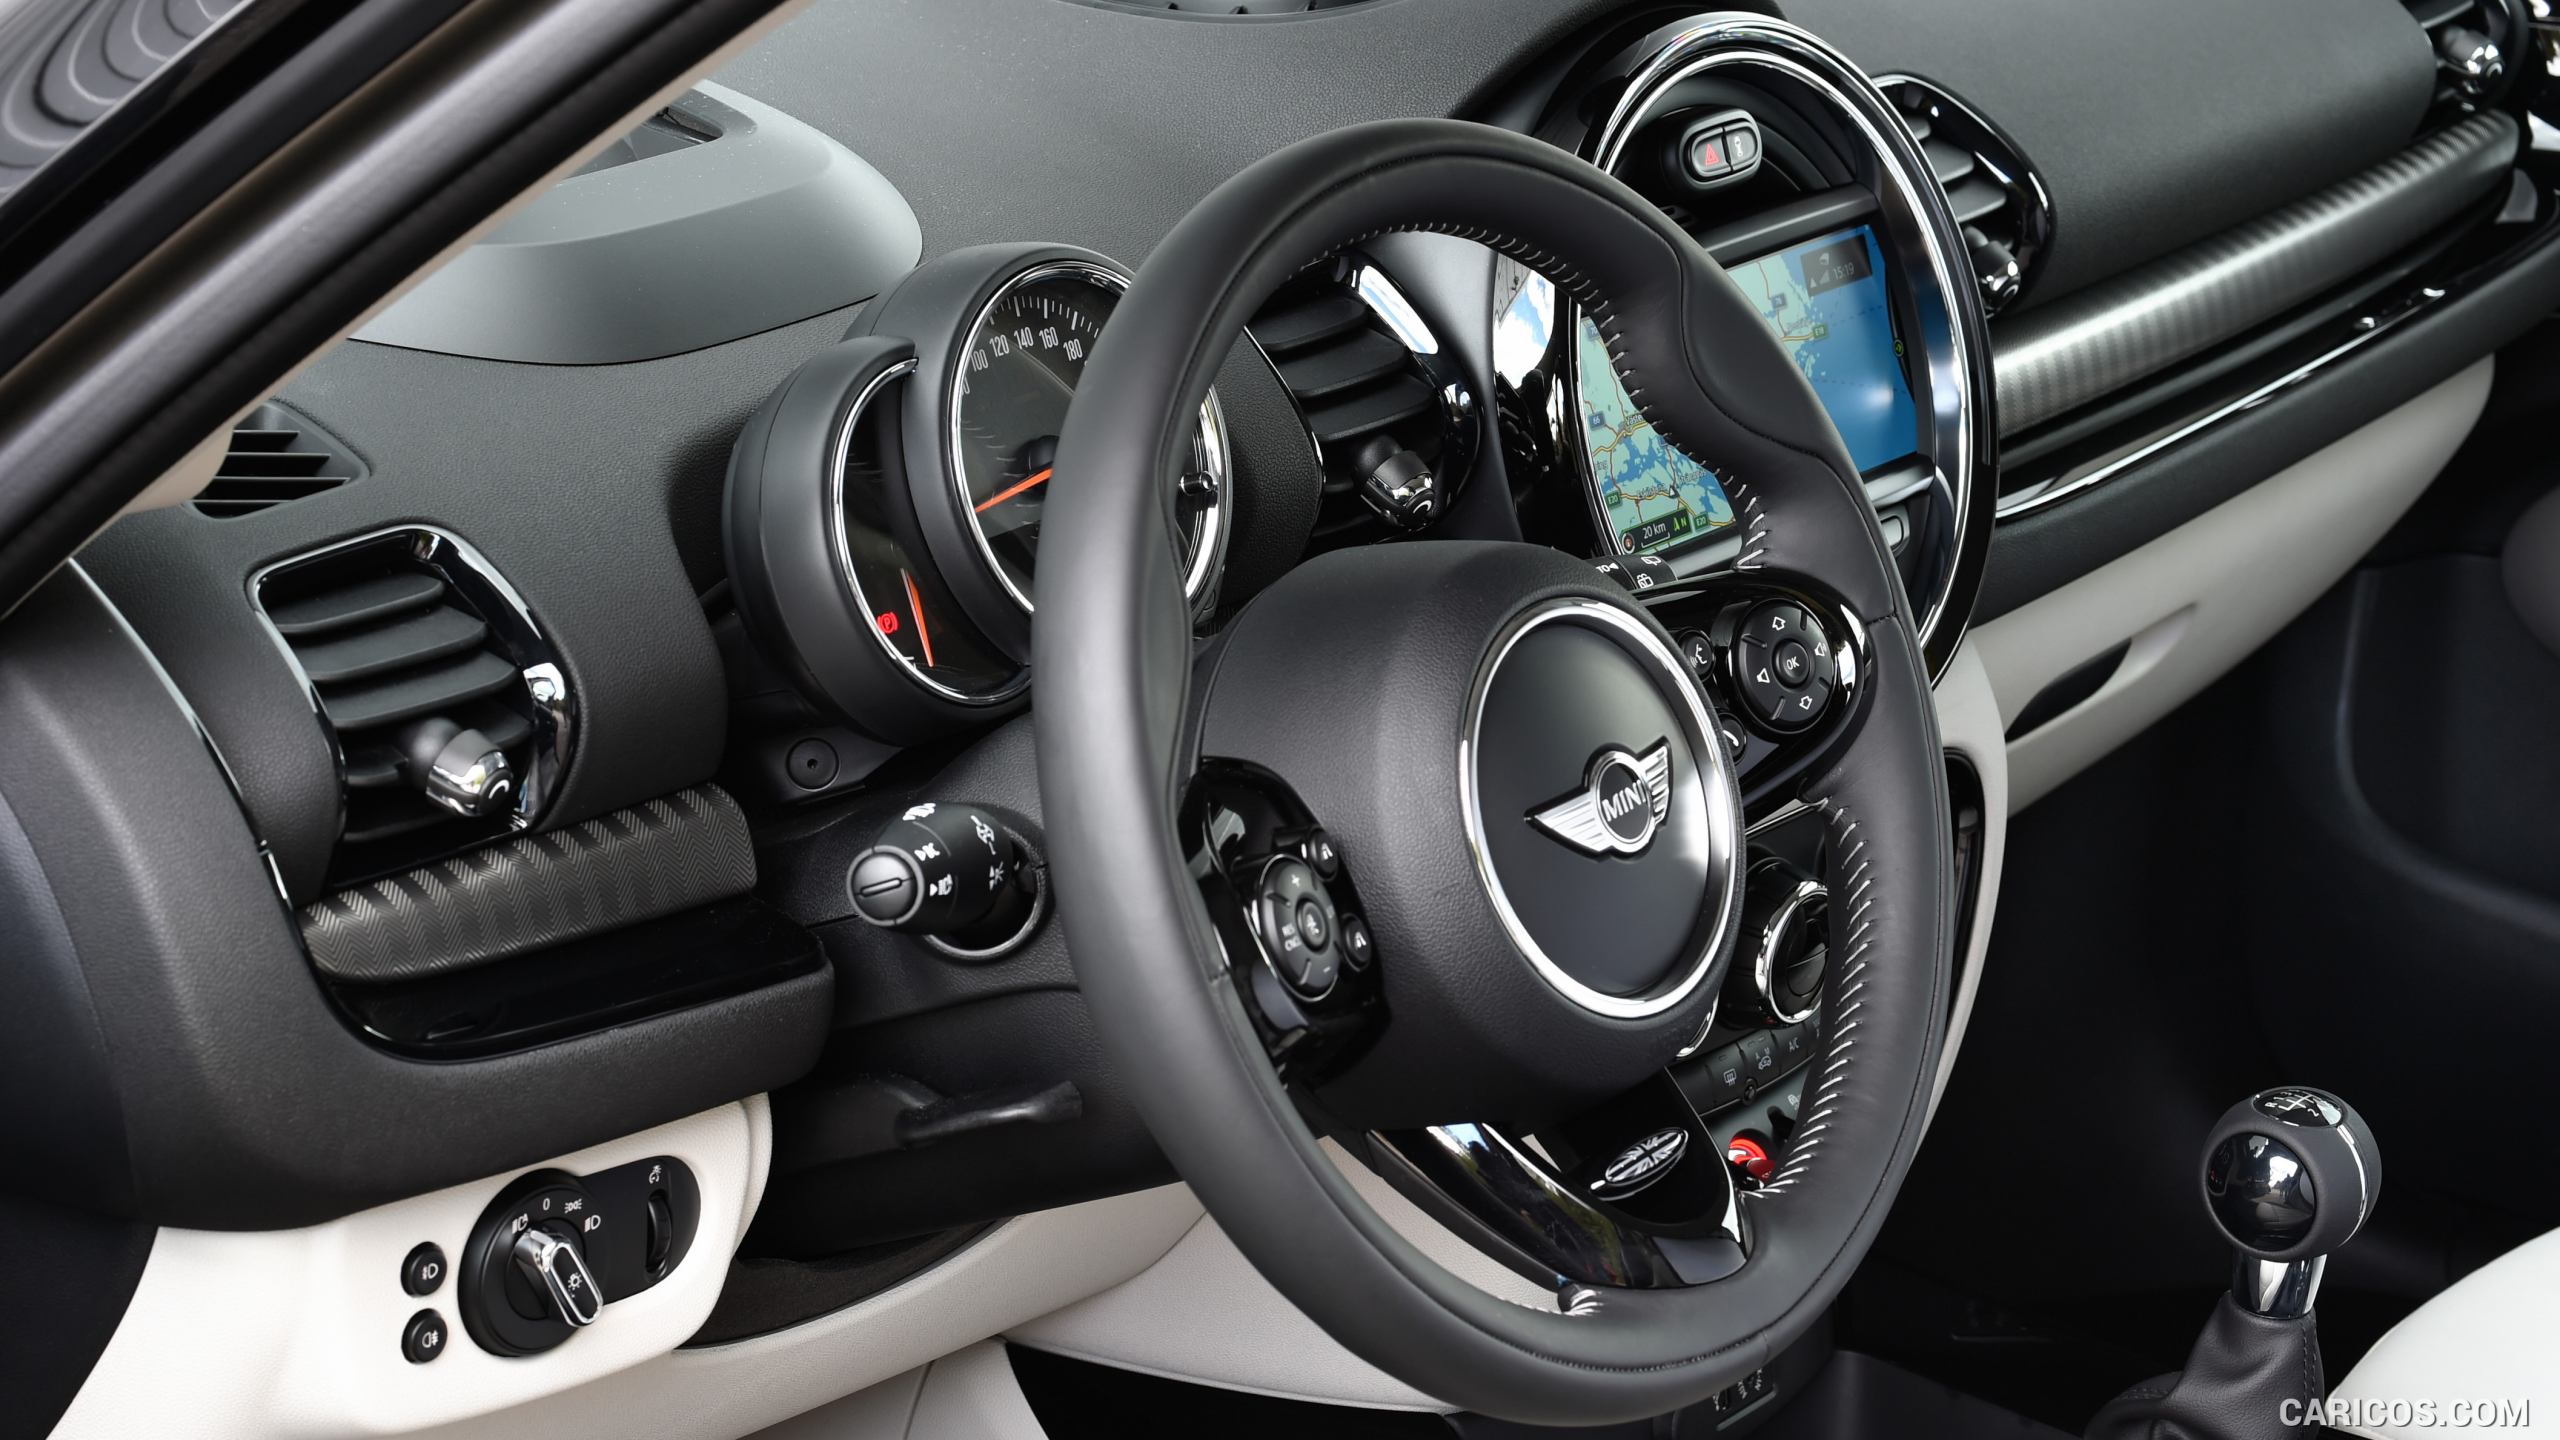 2016 MINI Cooper S Clubman in Metallic Melting Silver - Interior, Steering Wheel, #236 of 380